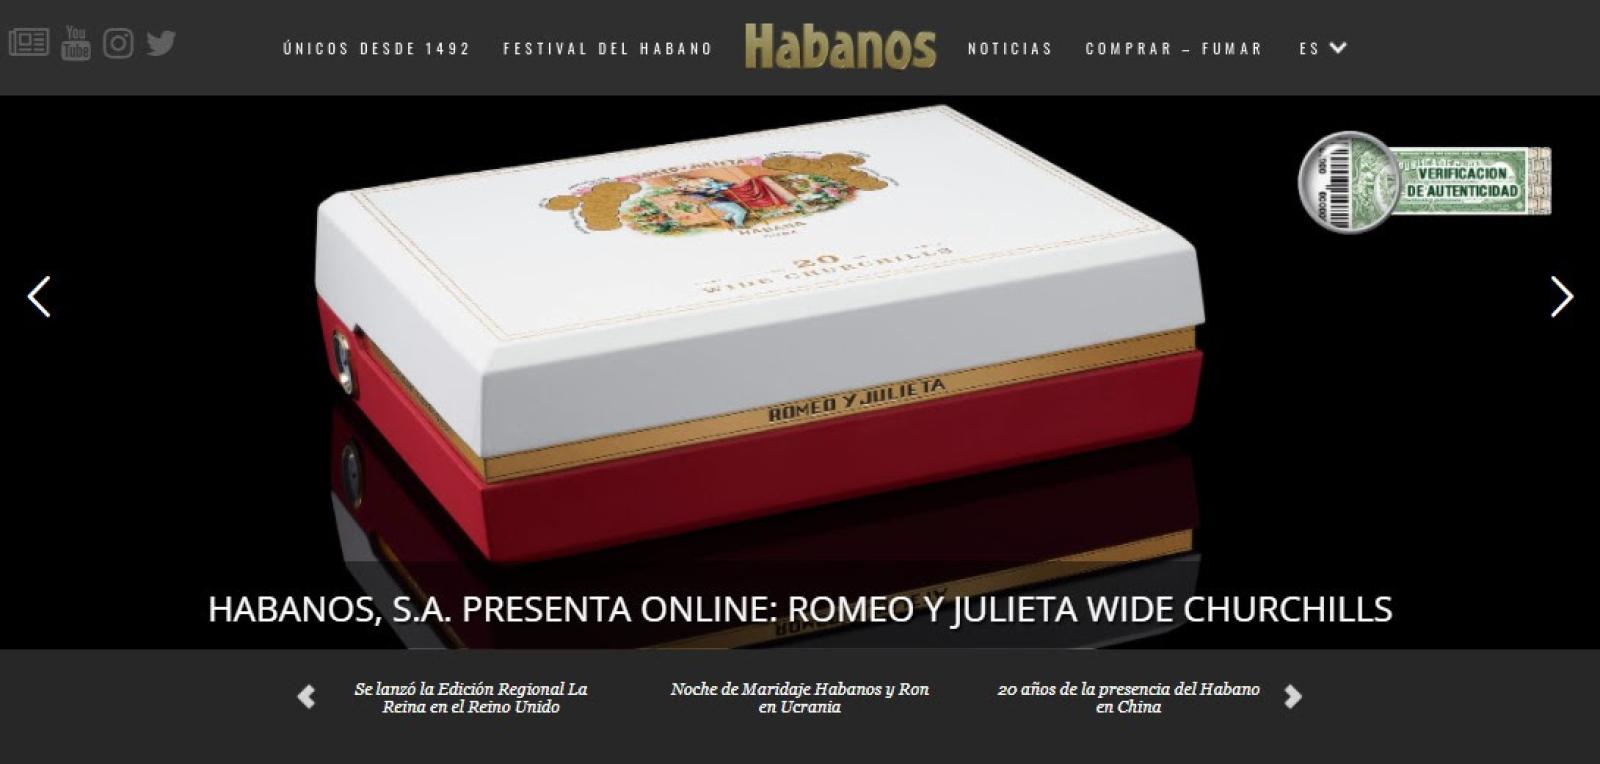 Habanos S.A. presents new website